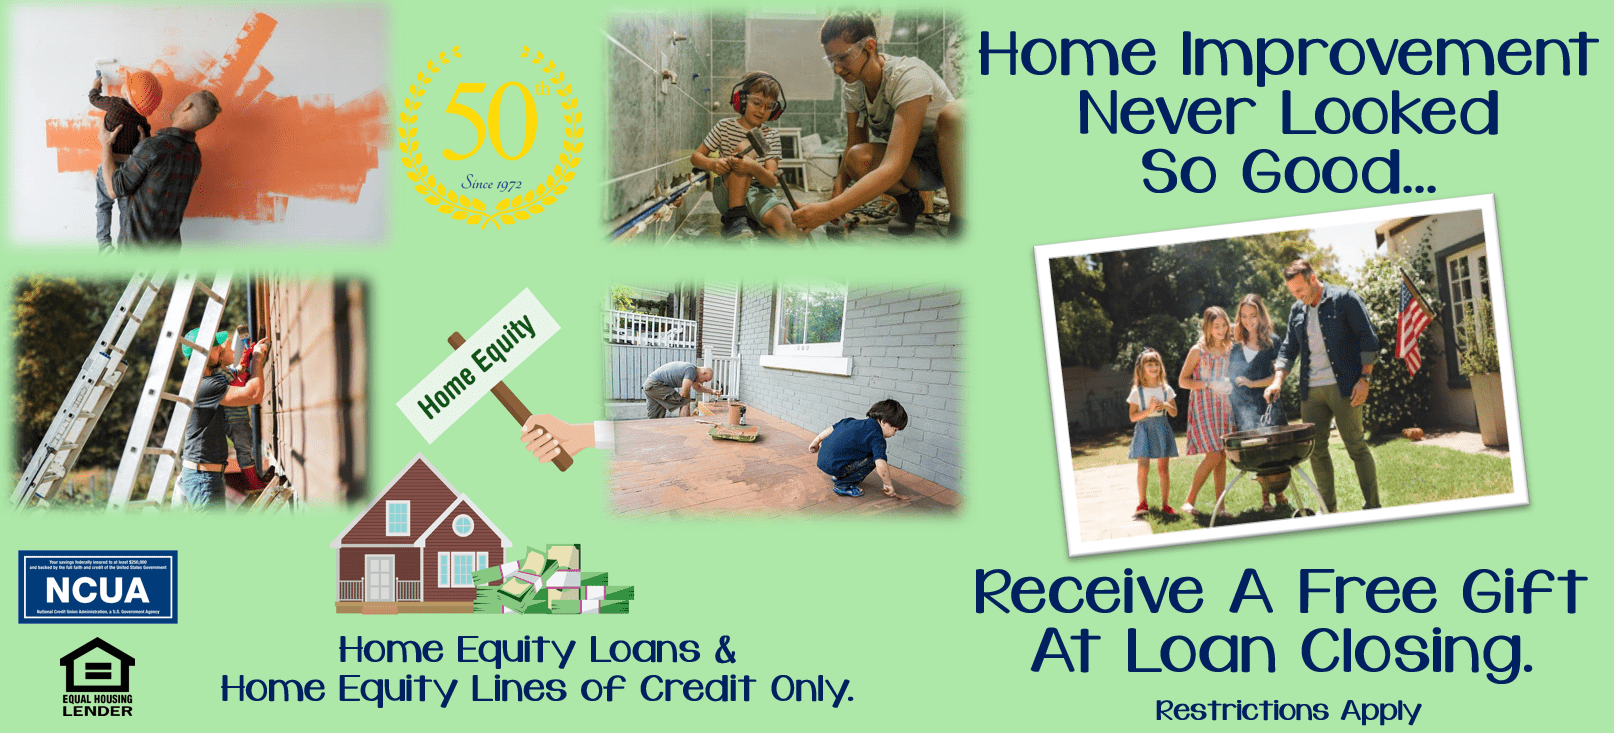 Home Equity Loan free gift